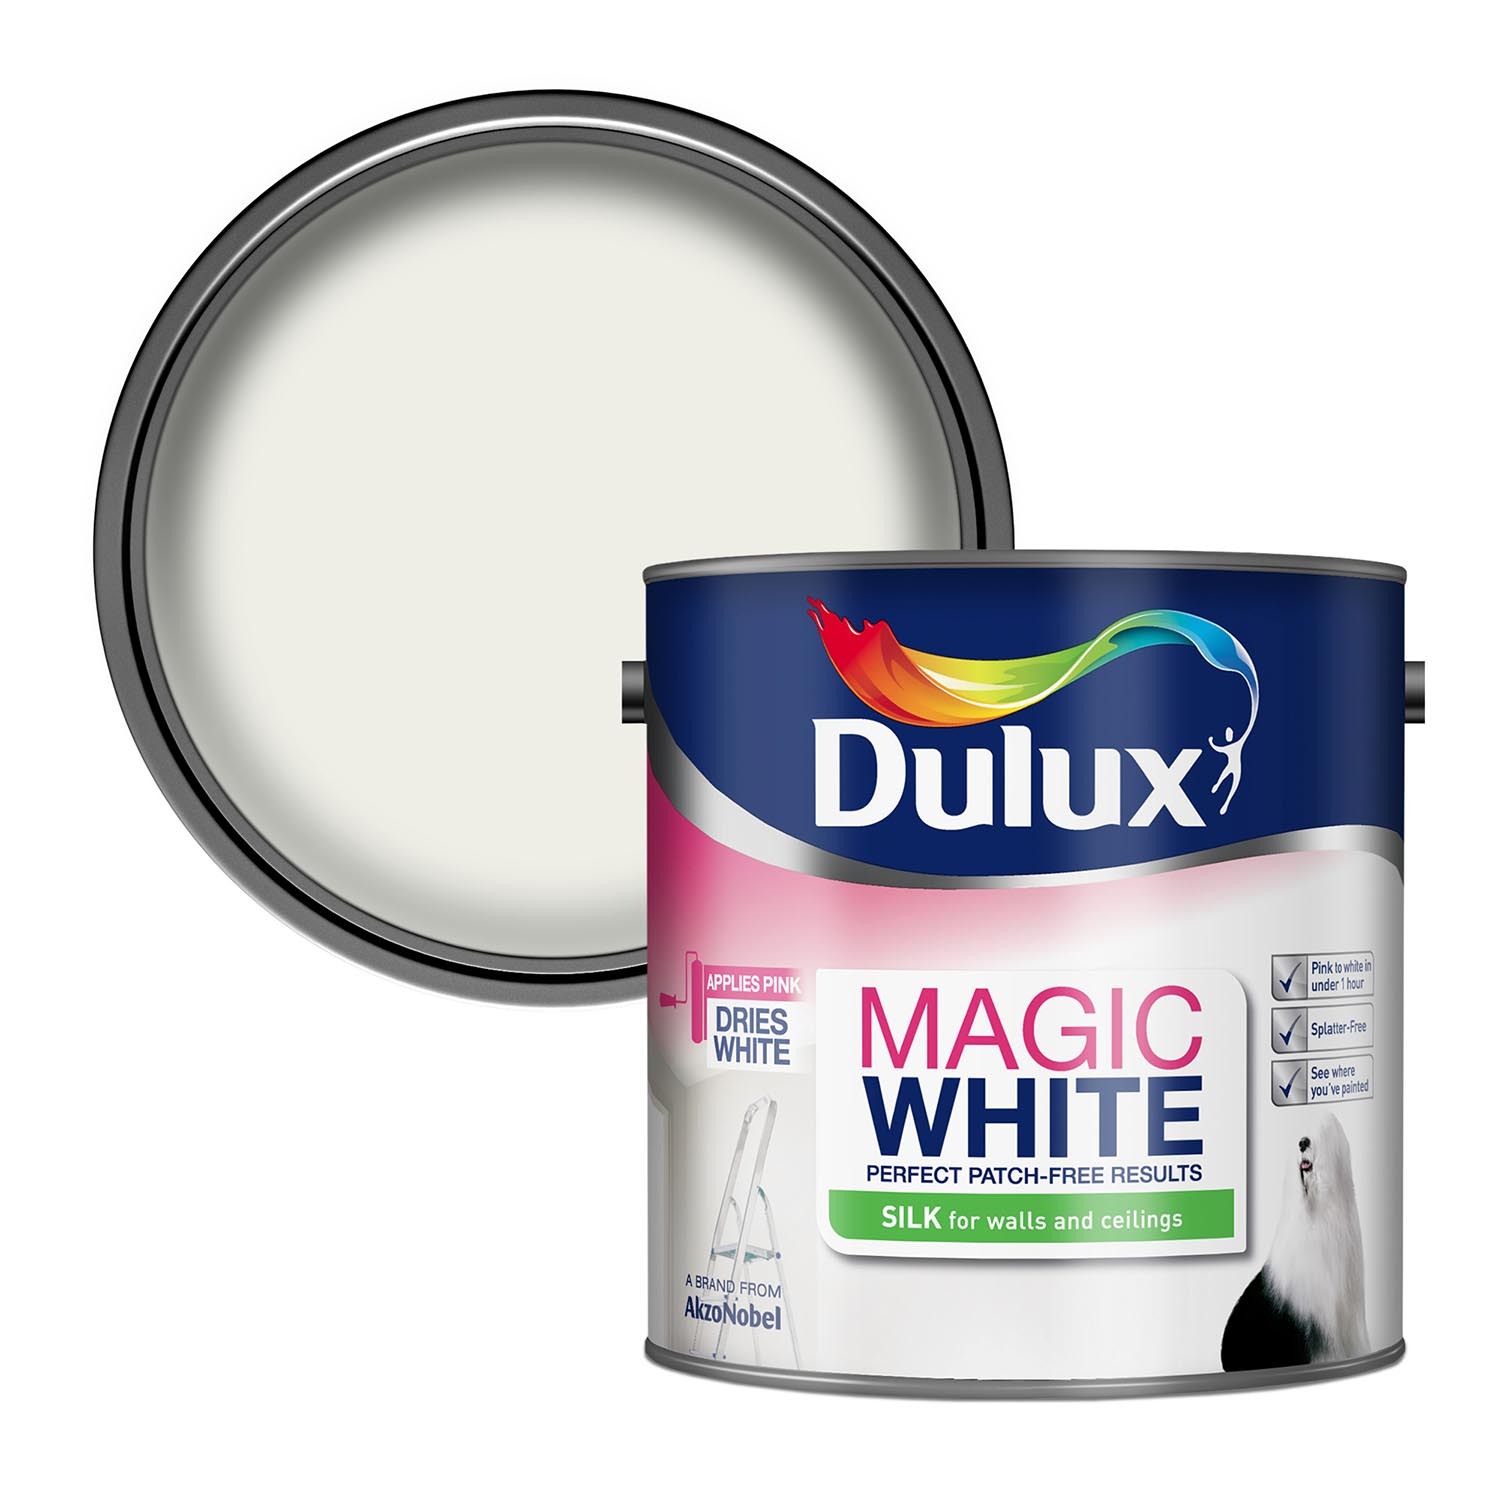 Dulux Silk Paint - Magic White - White Image 1